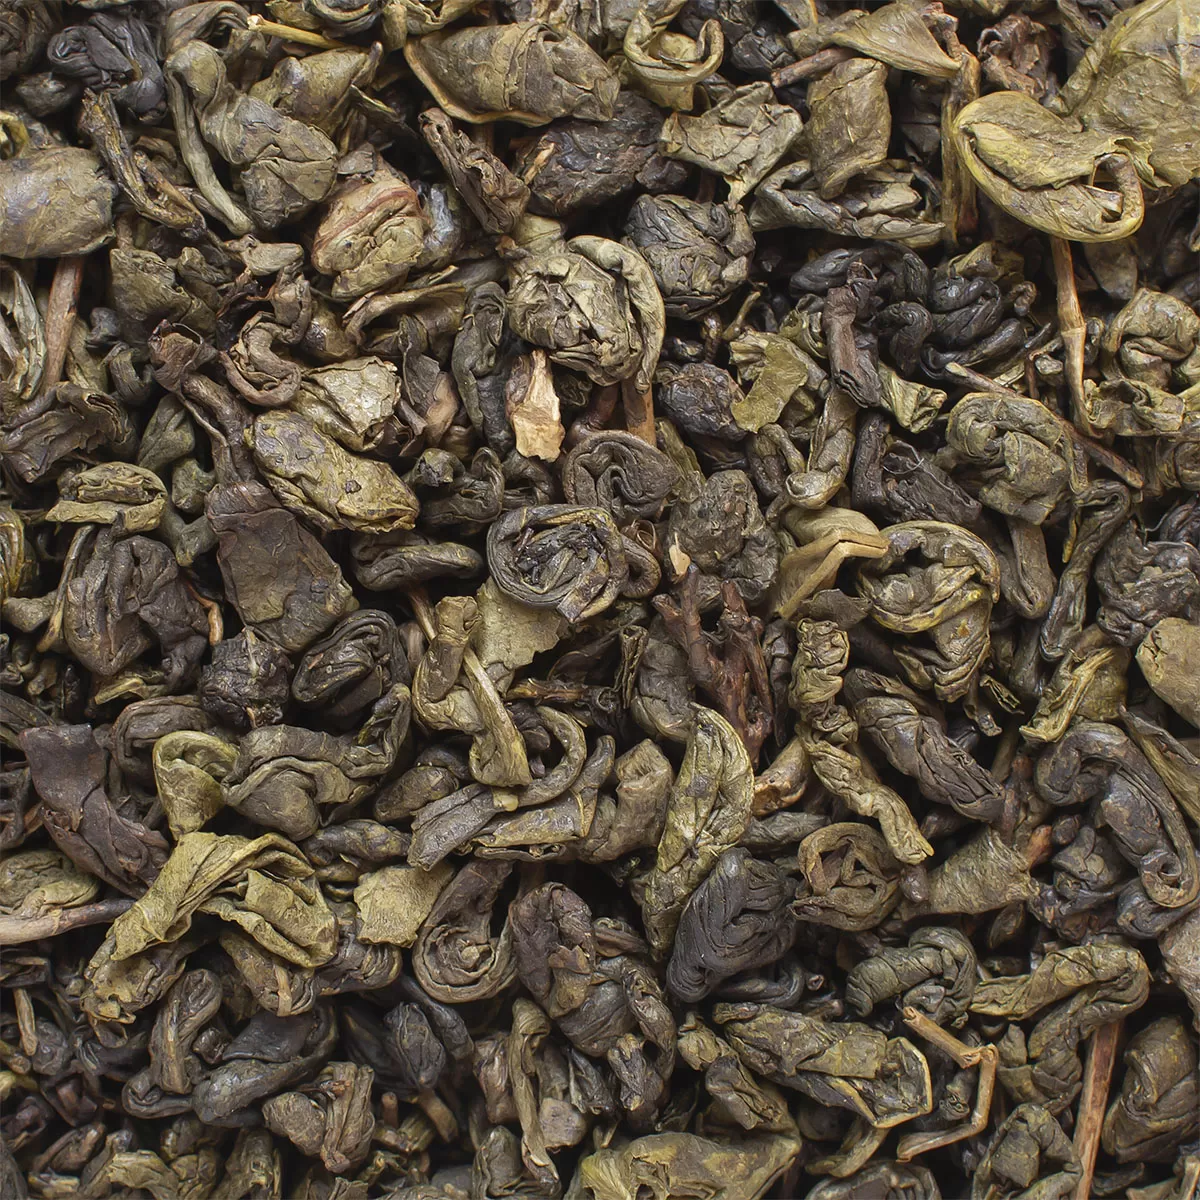 Зелёный чай Саусеп